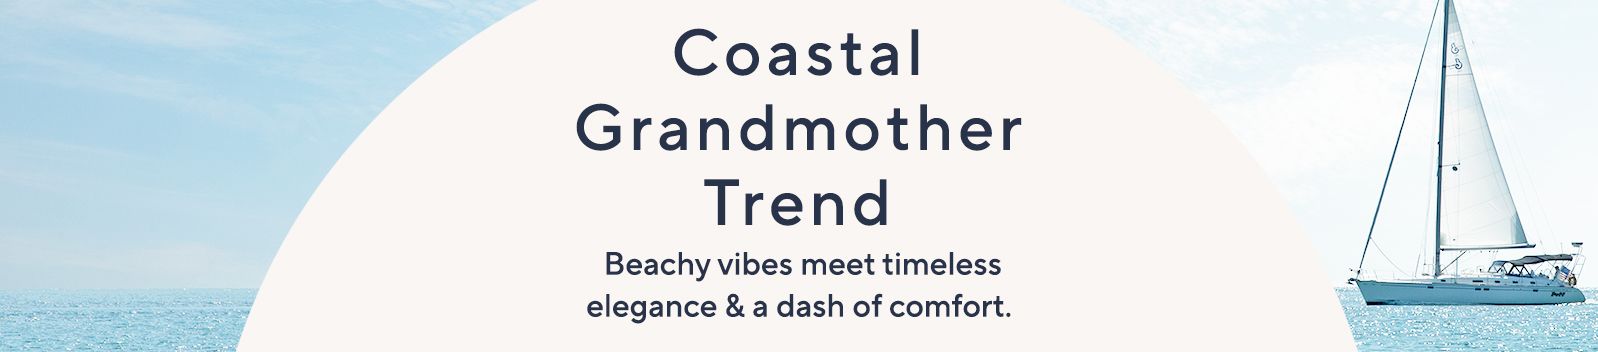 Coastal Grandmother Trend - Beachy vibes meet timeless elegance & a dash of comfort. 